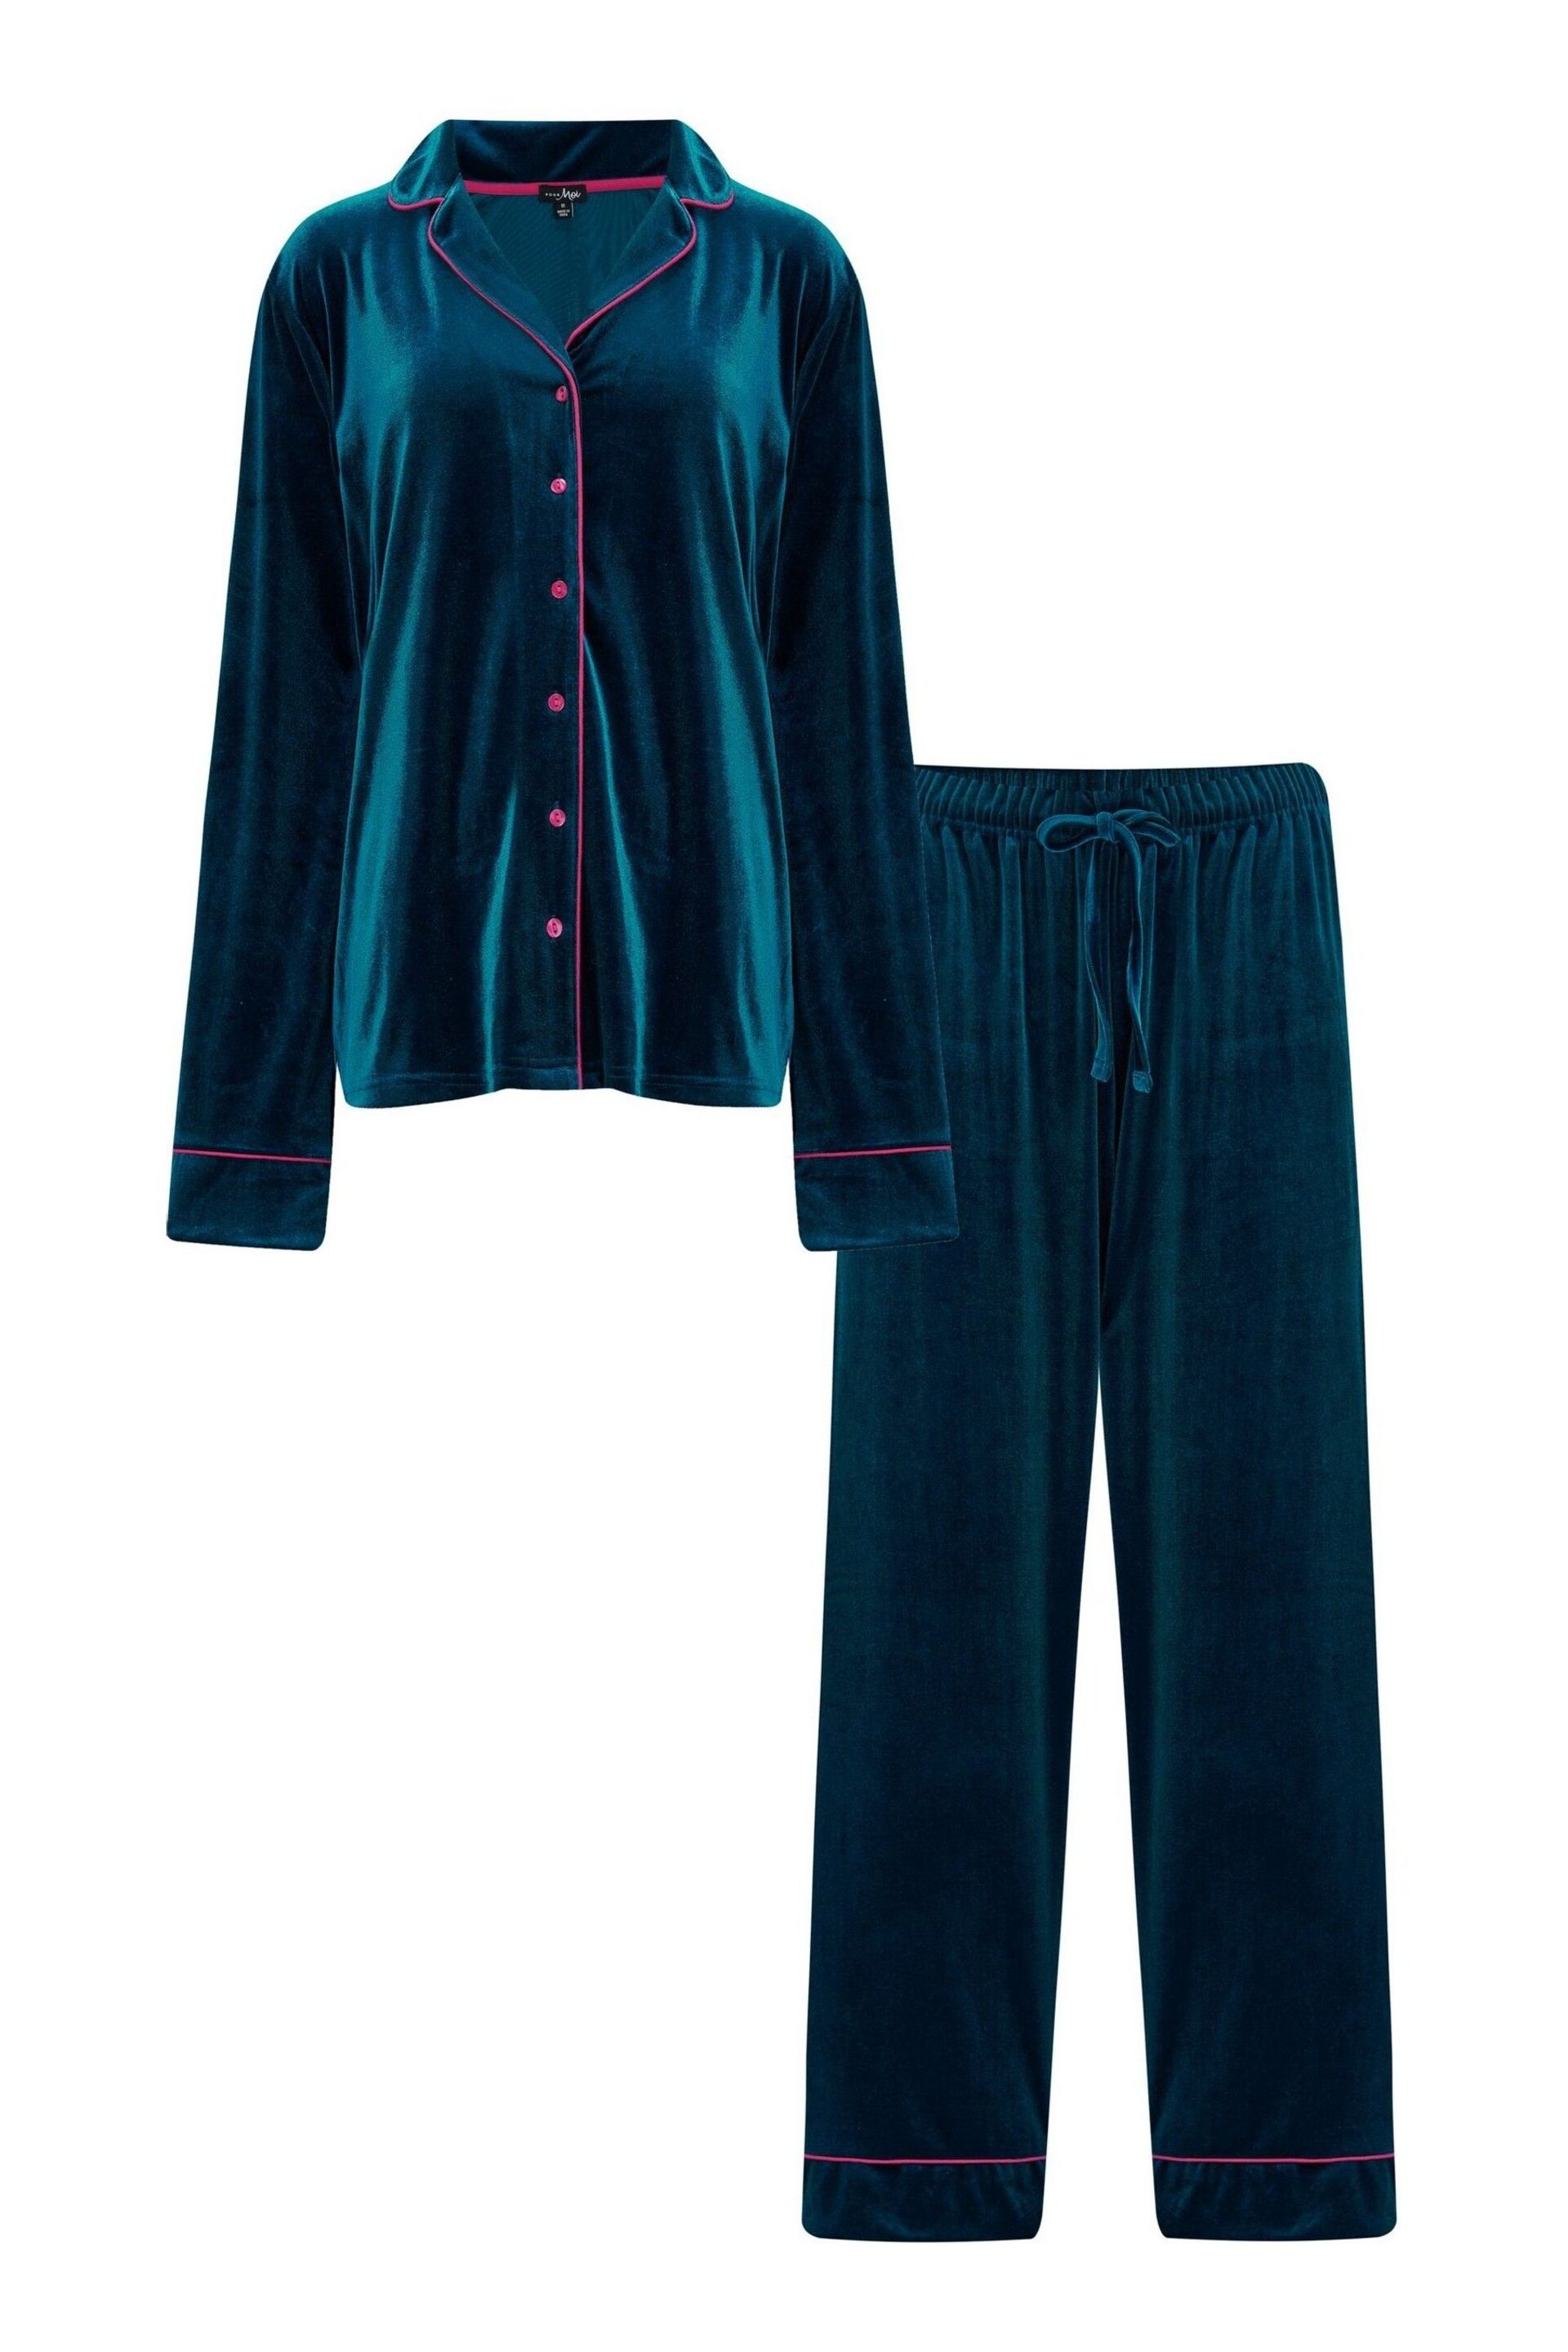 Pour Moi Green Velour Revere Collar Pyjama Set - Image 4 of 4